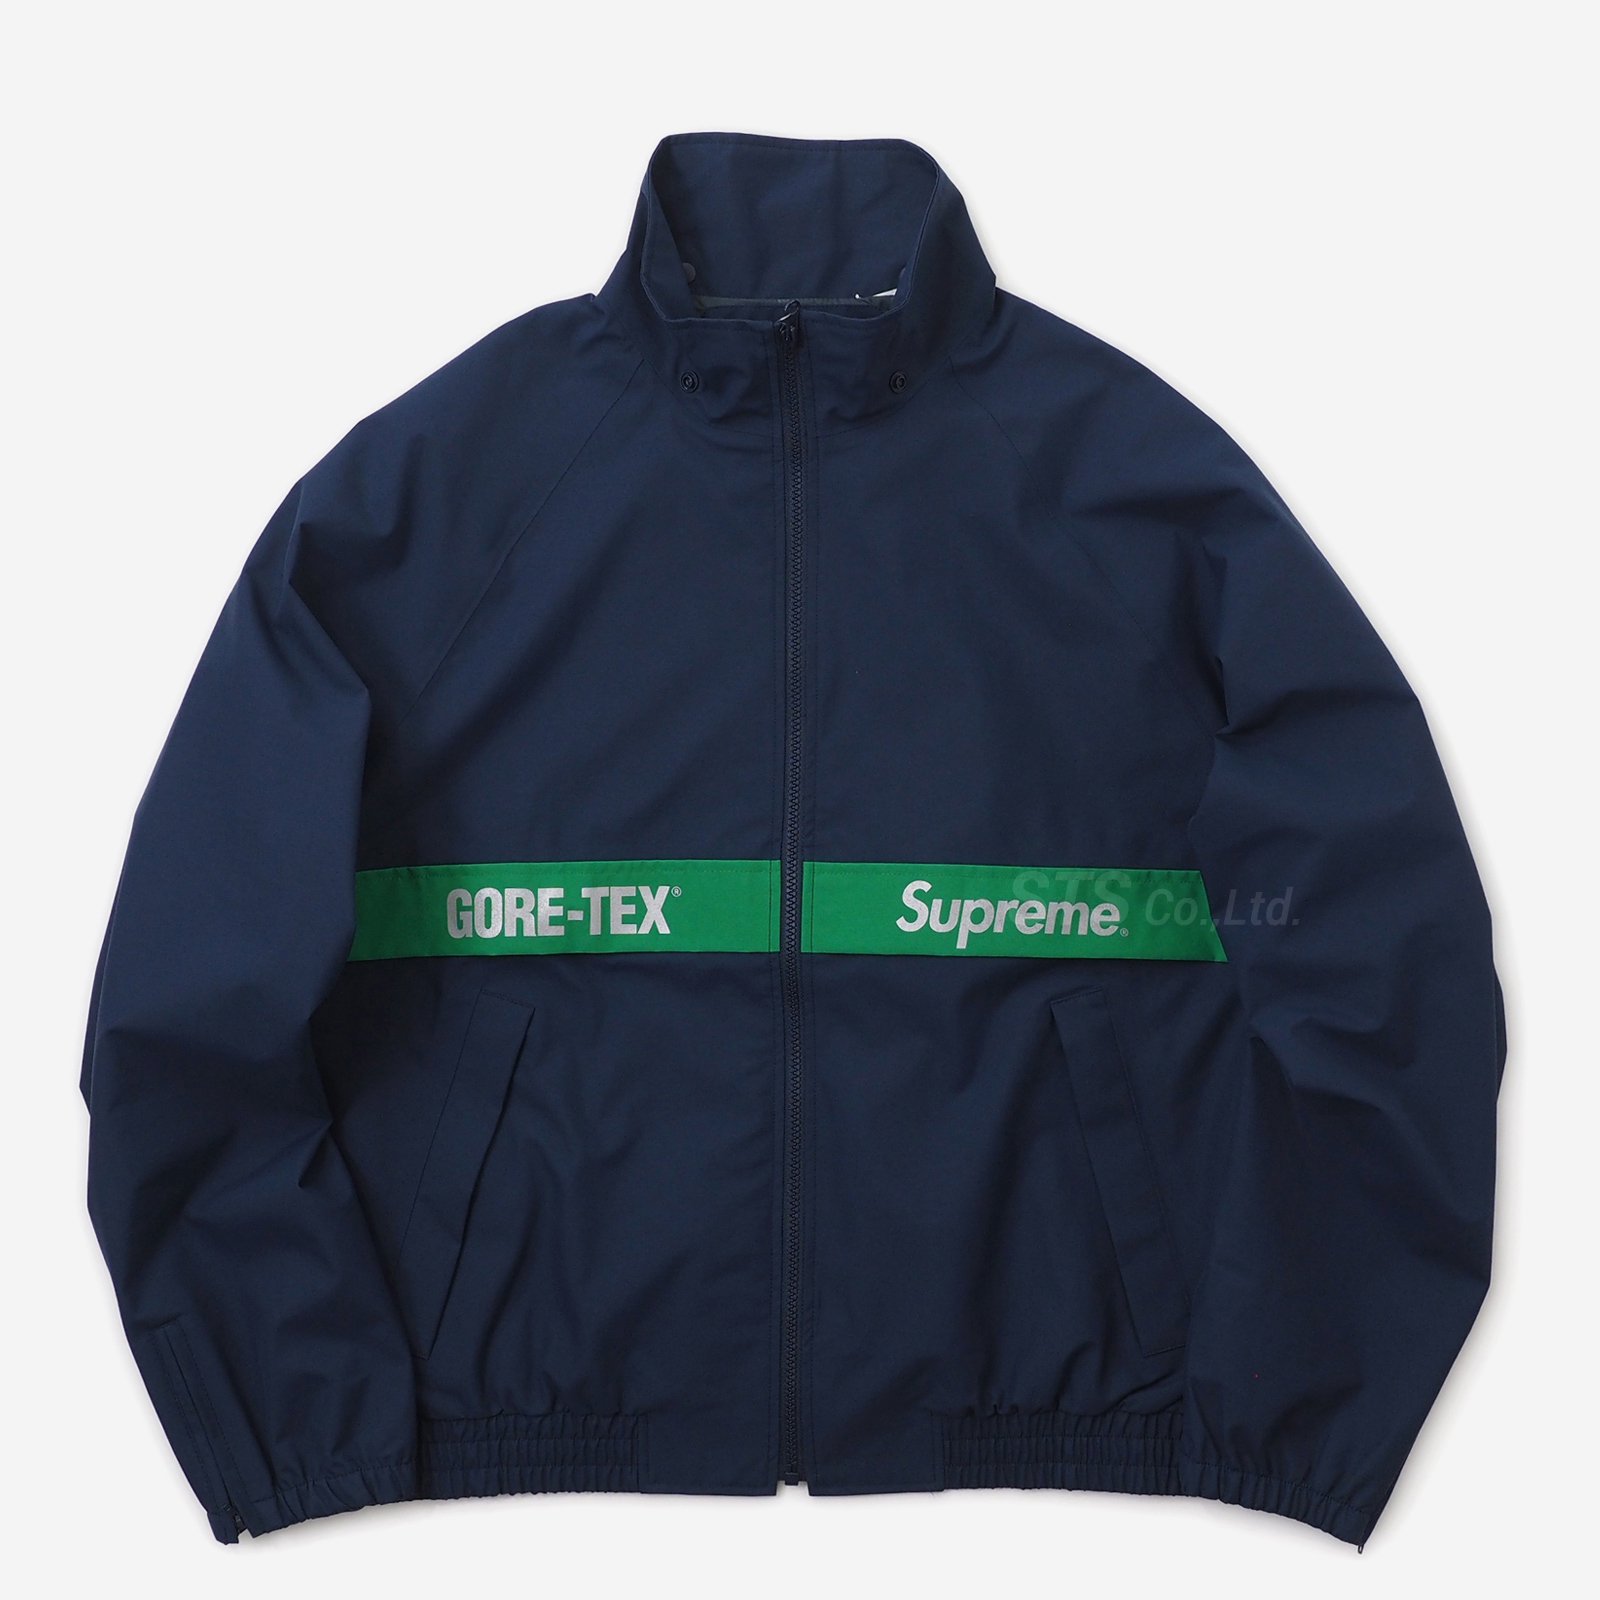 supreme goretex jacket 2018aw